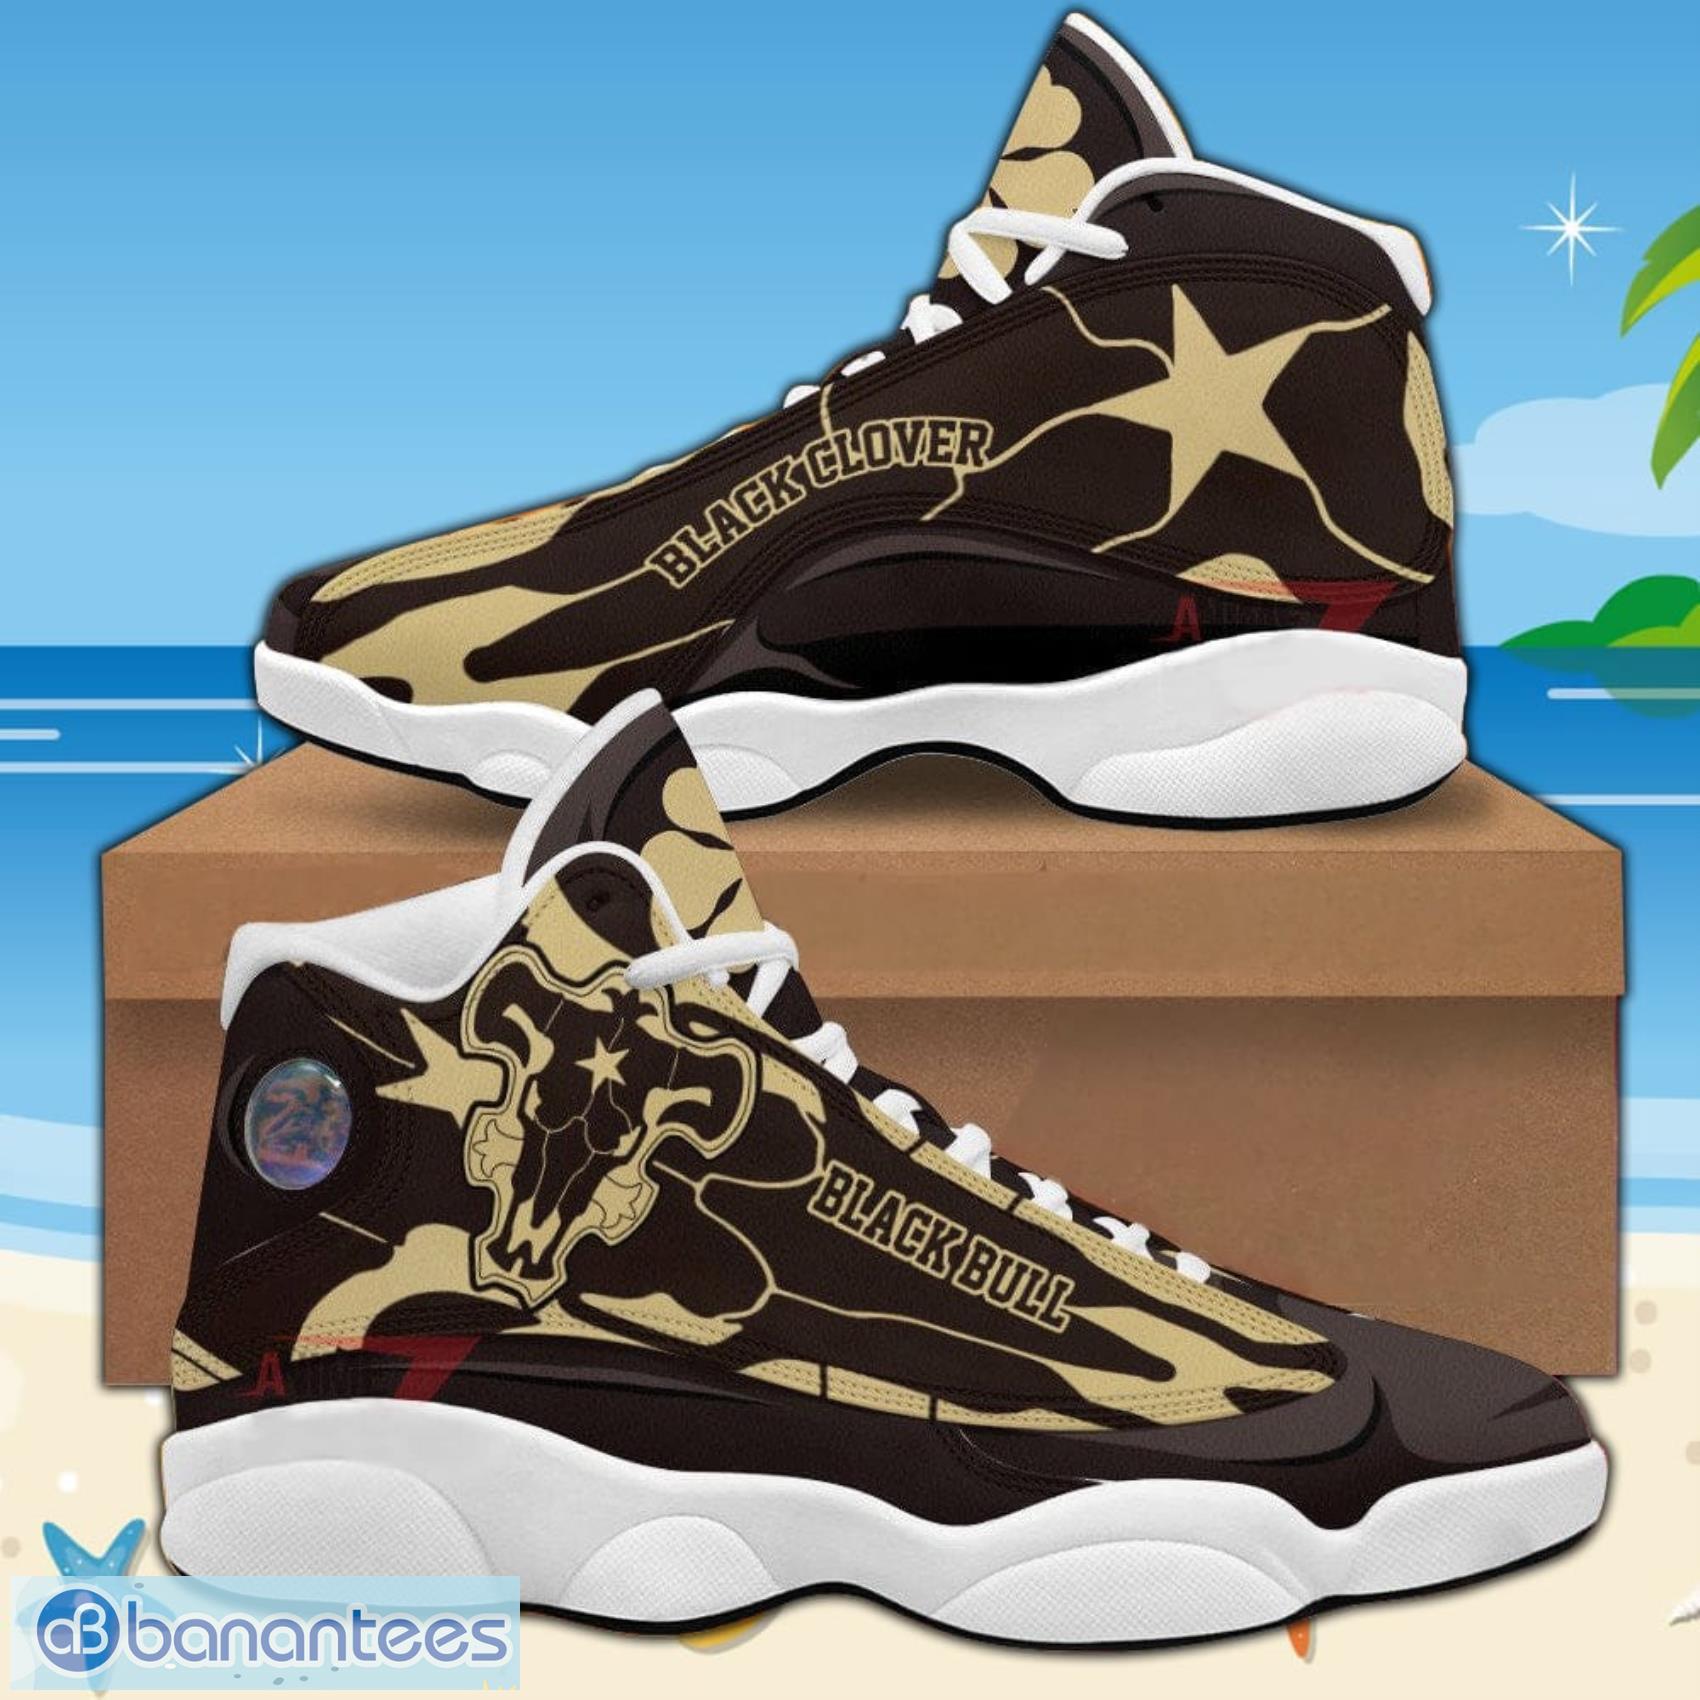 Black Clover Black Bull AJ13 Sneakers Anime Air Jordan 13 Shoes